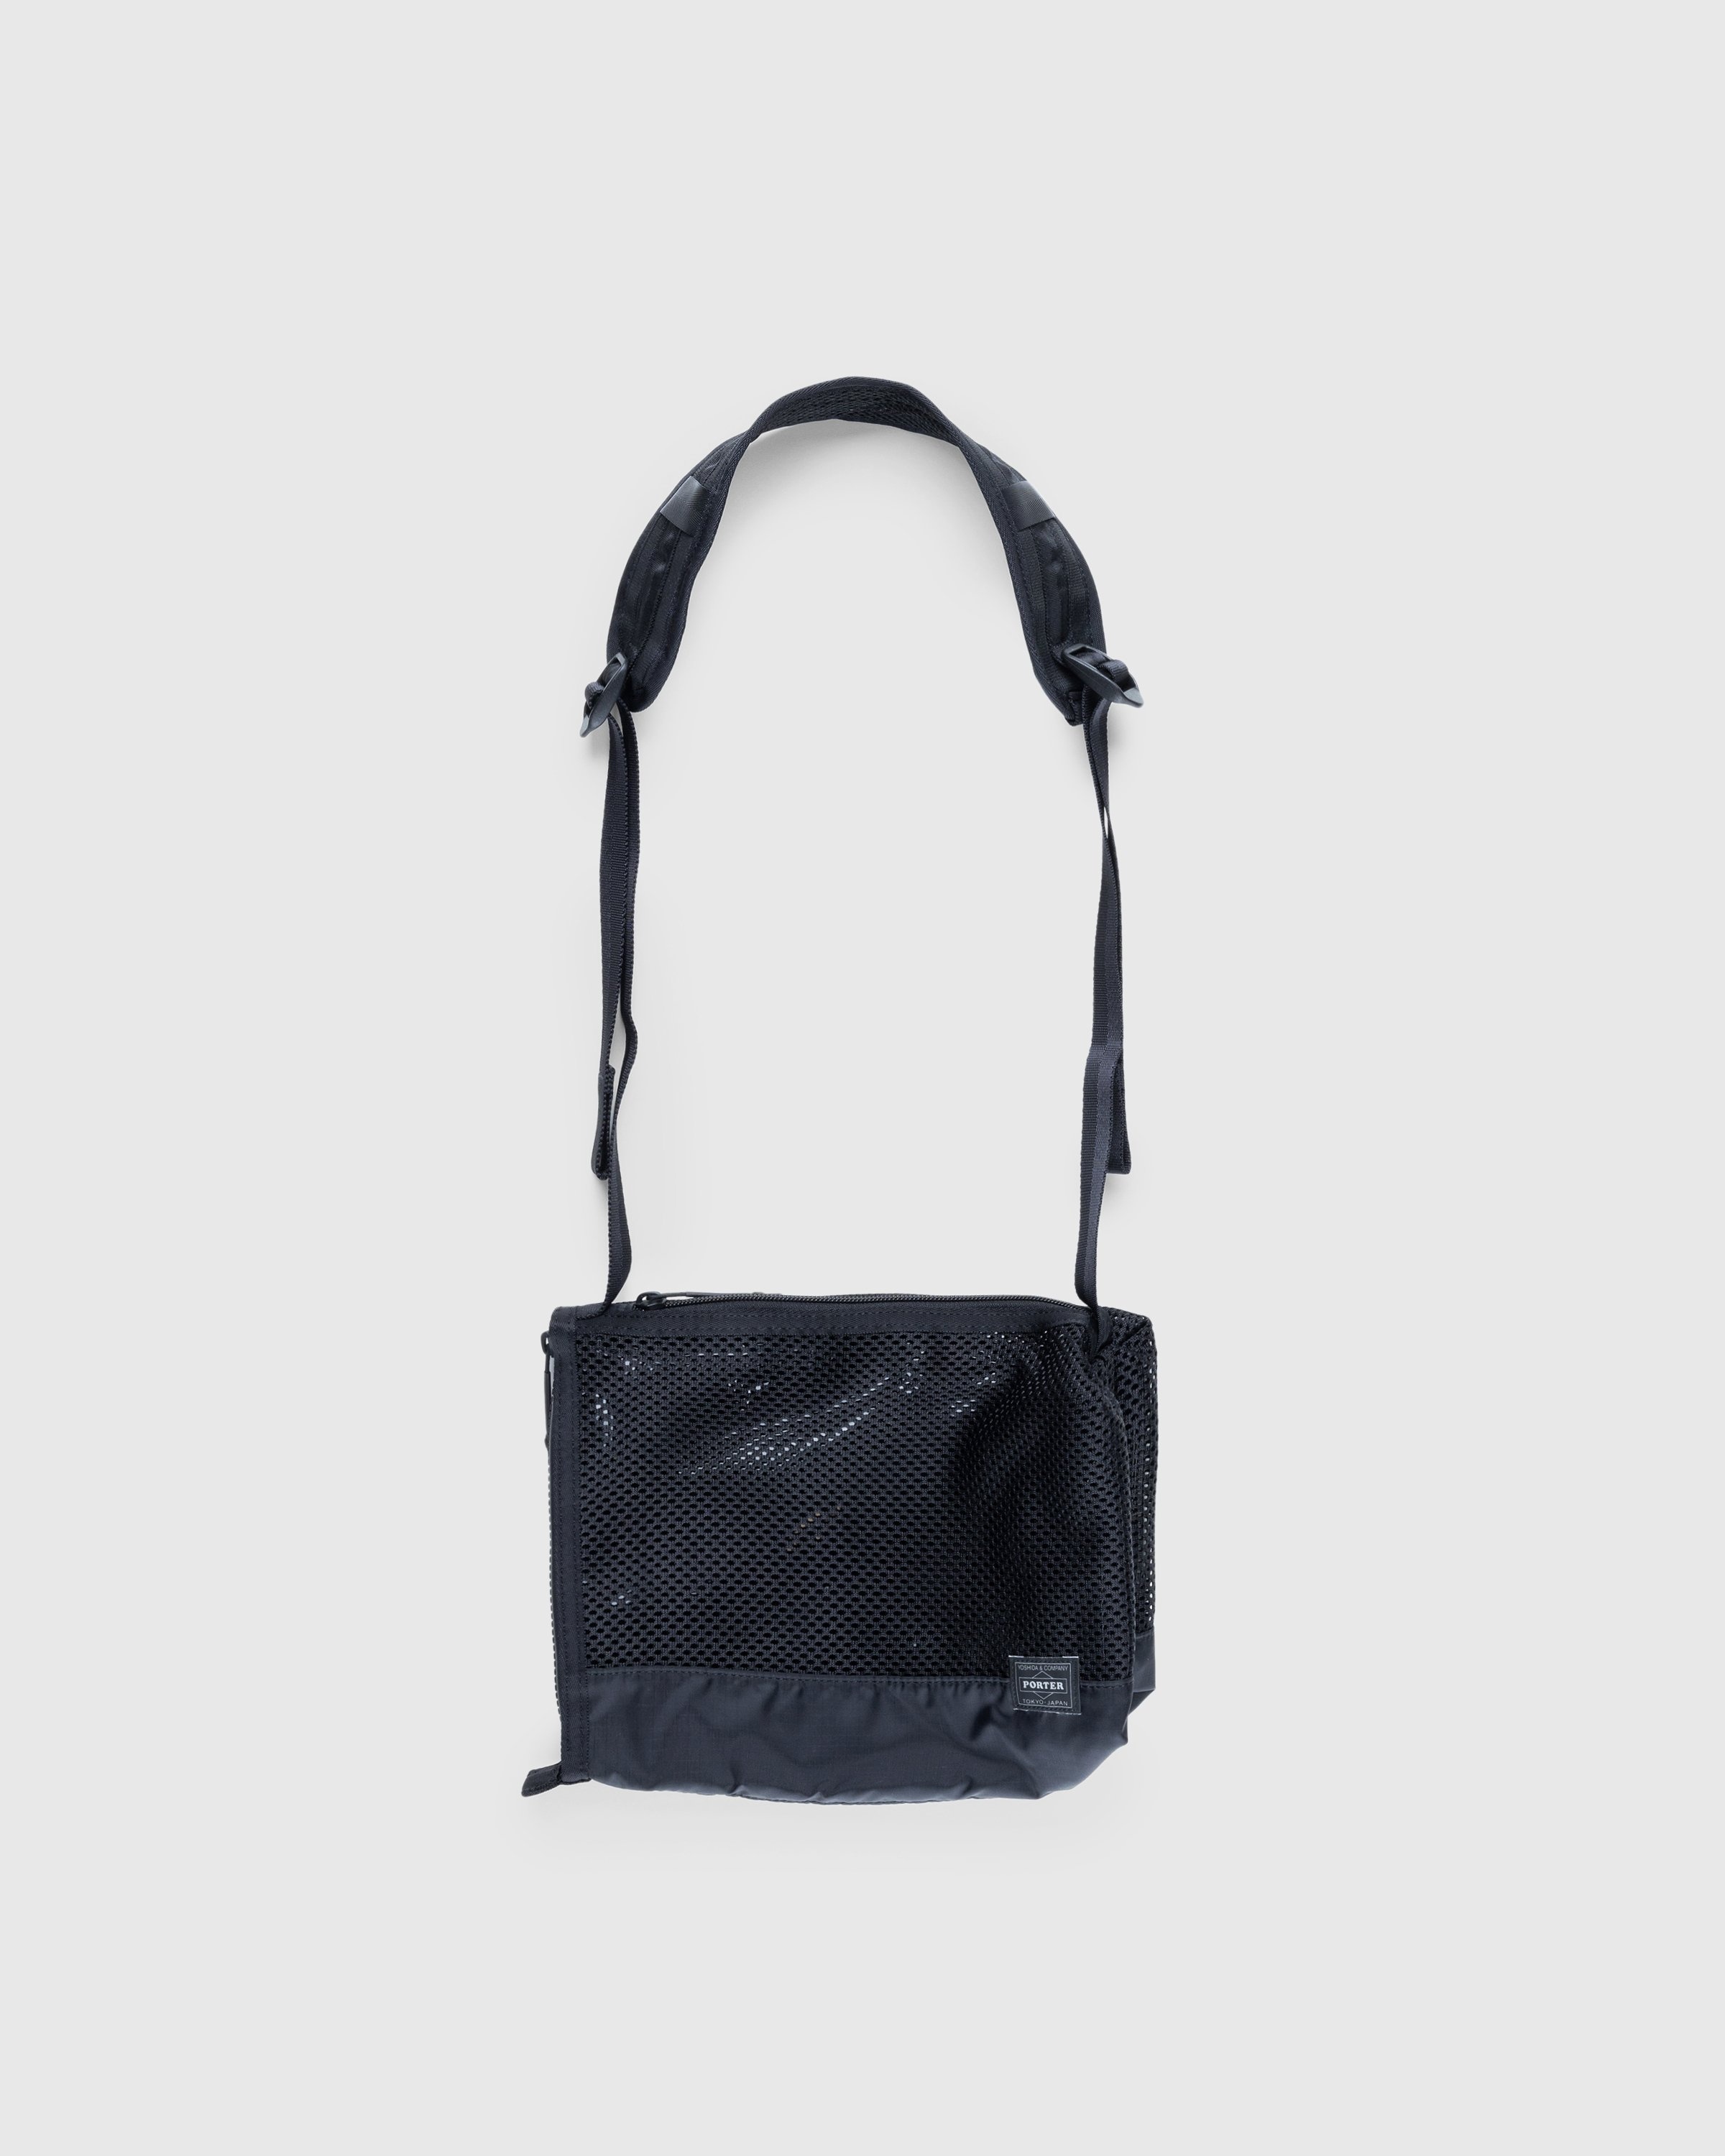 Porter-Yoshida & Co. – Screen Front Side Bag Black - Bags - Black - Image 2